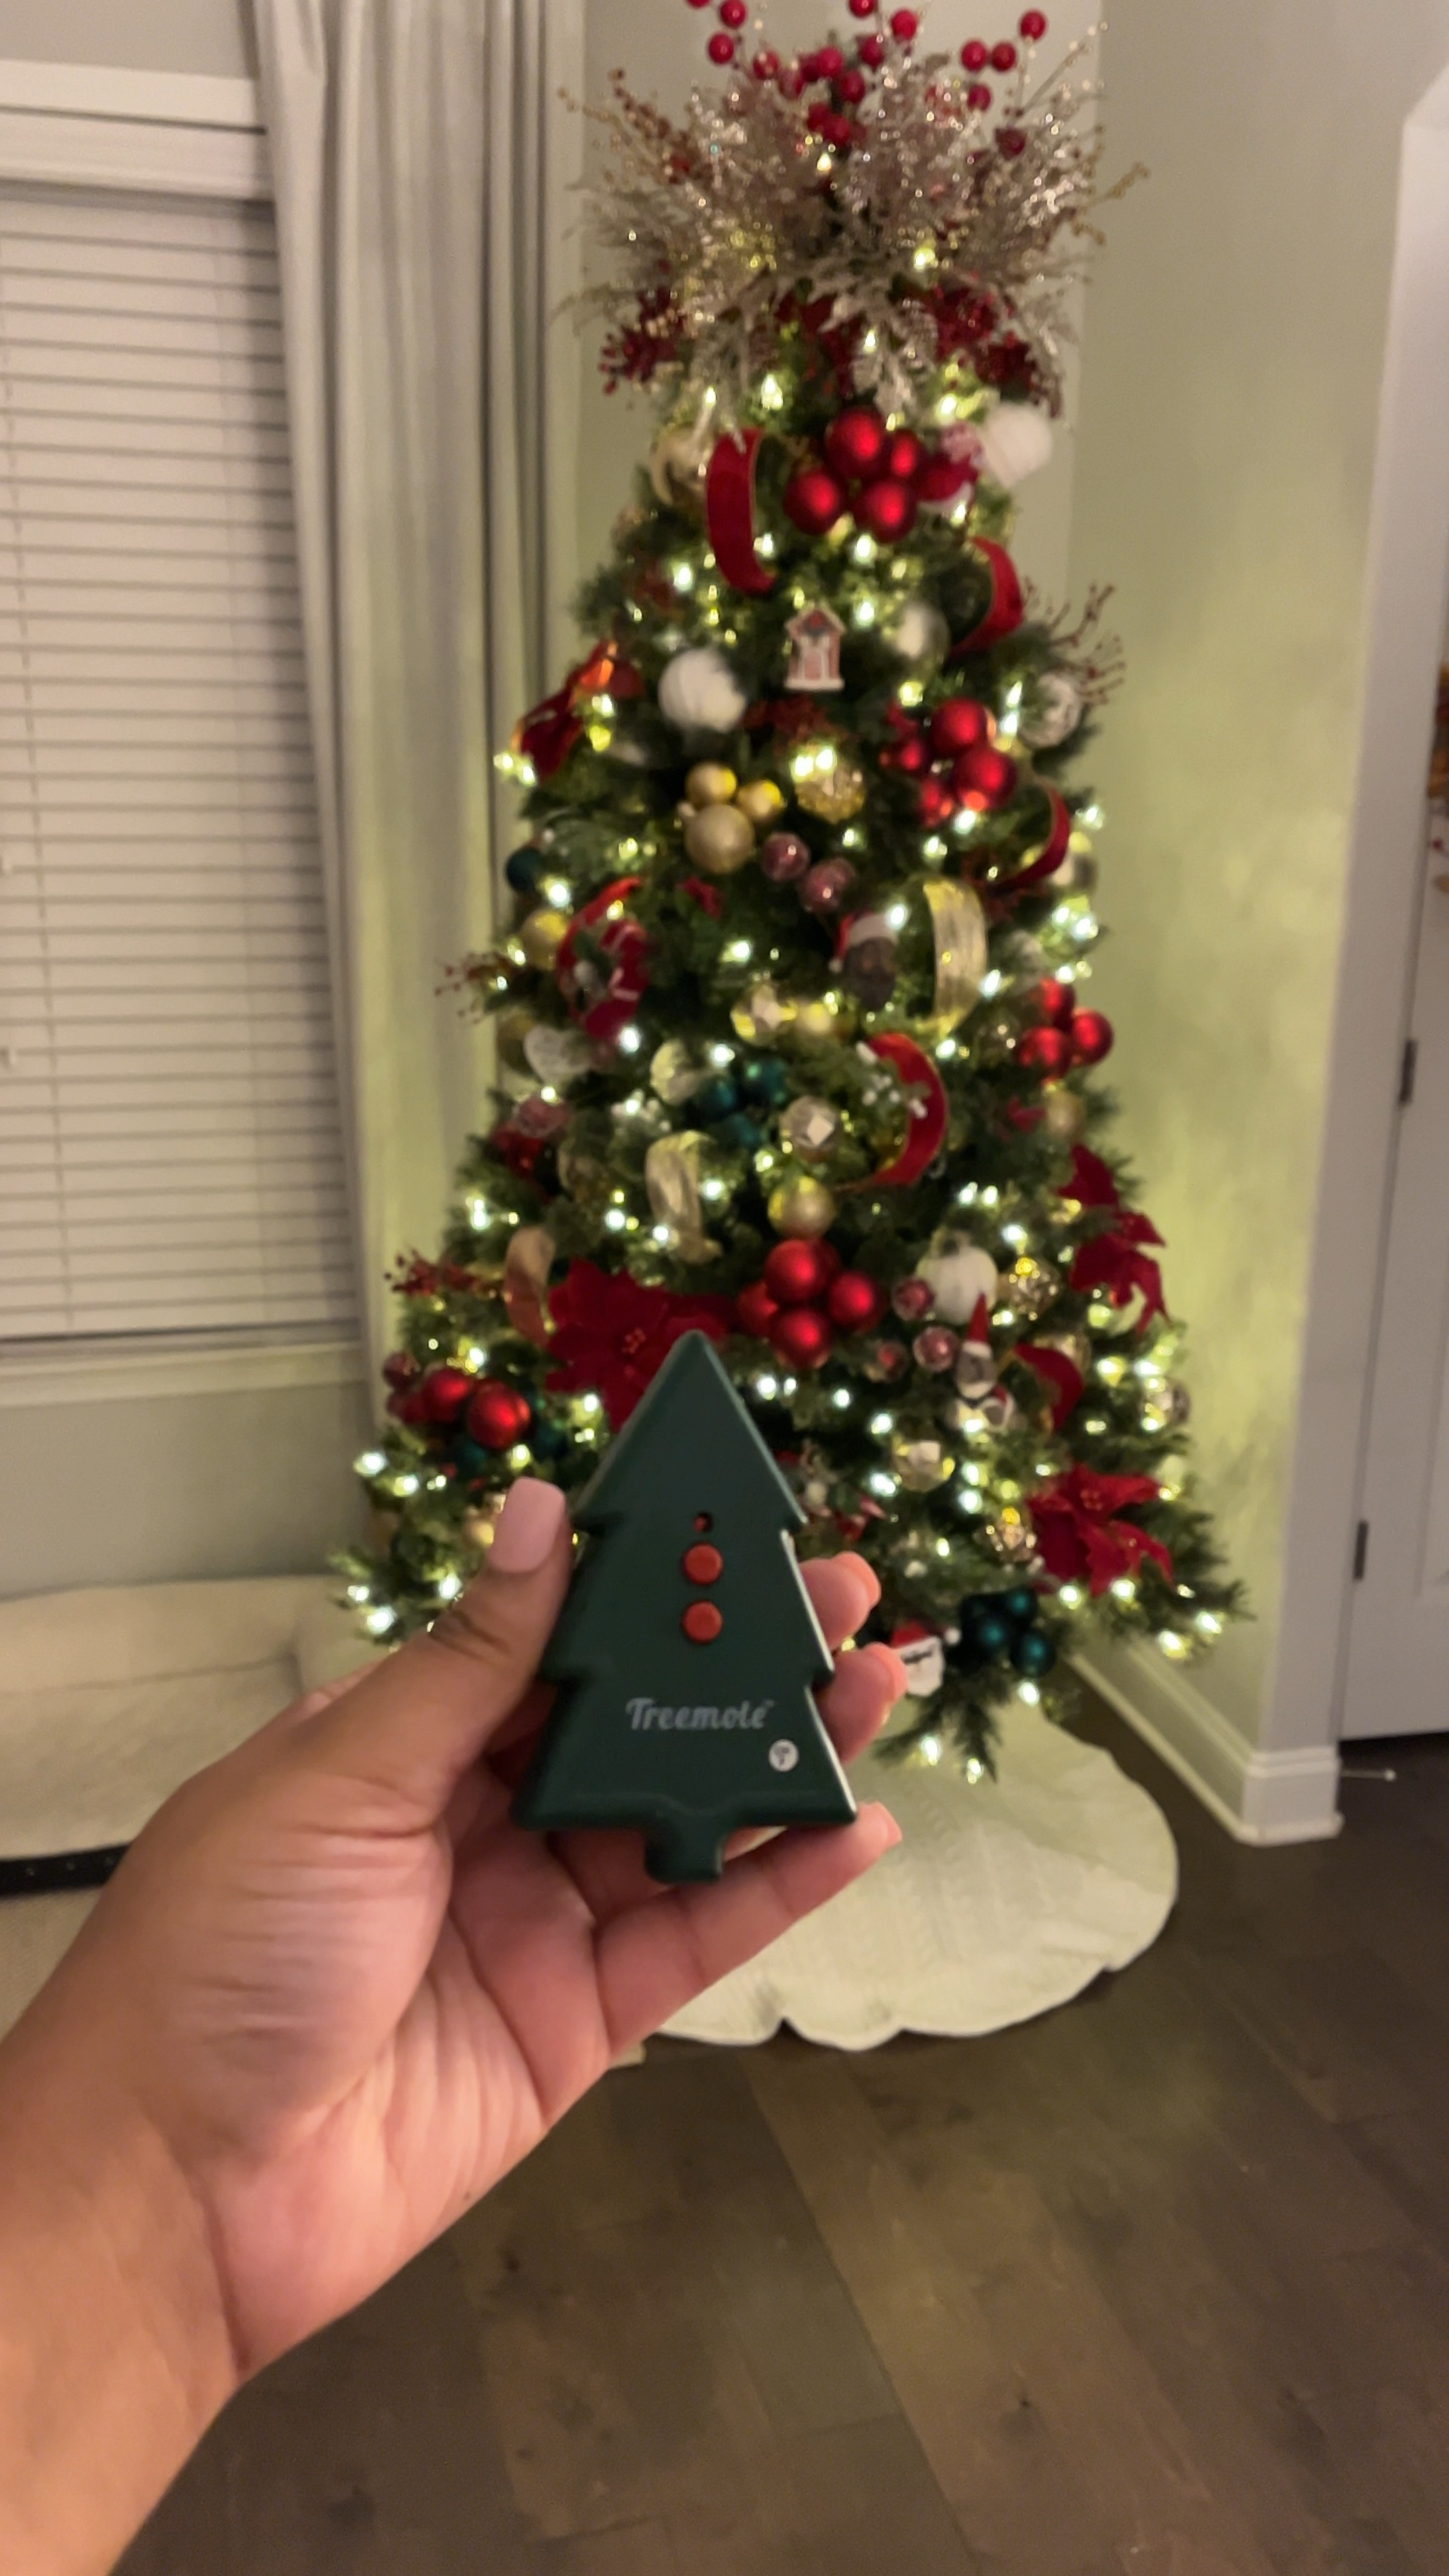 Treemote Wireless Remote Switch for Christmas Tree  